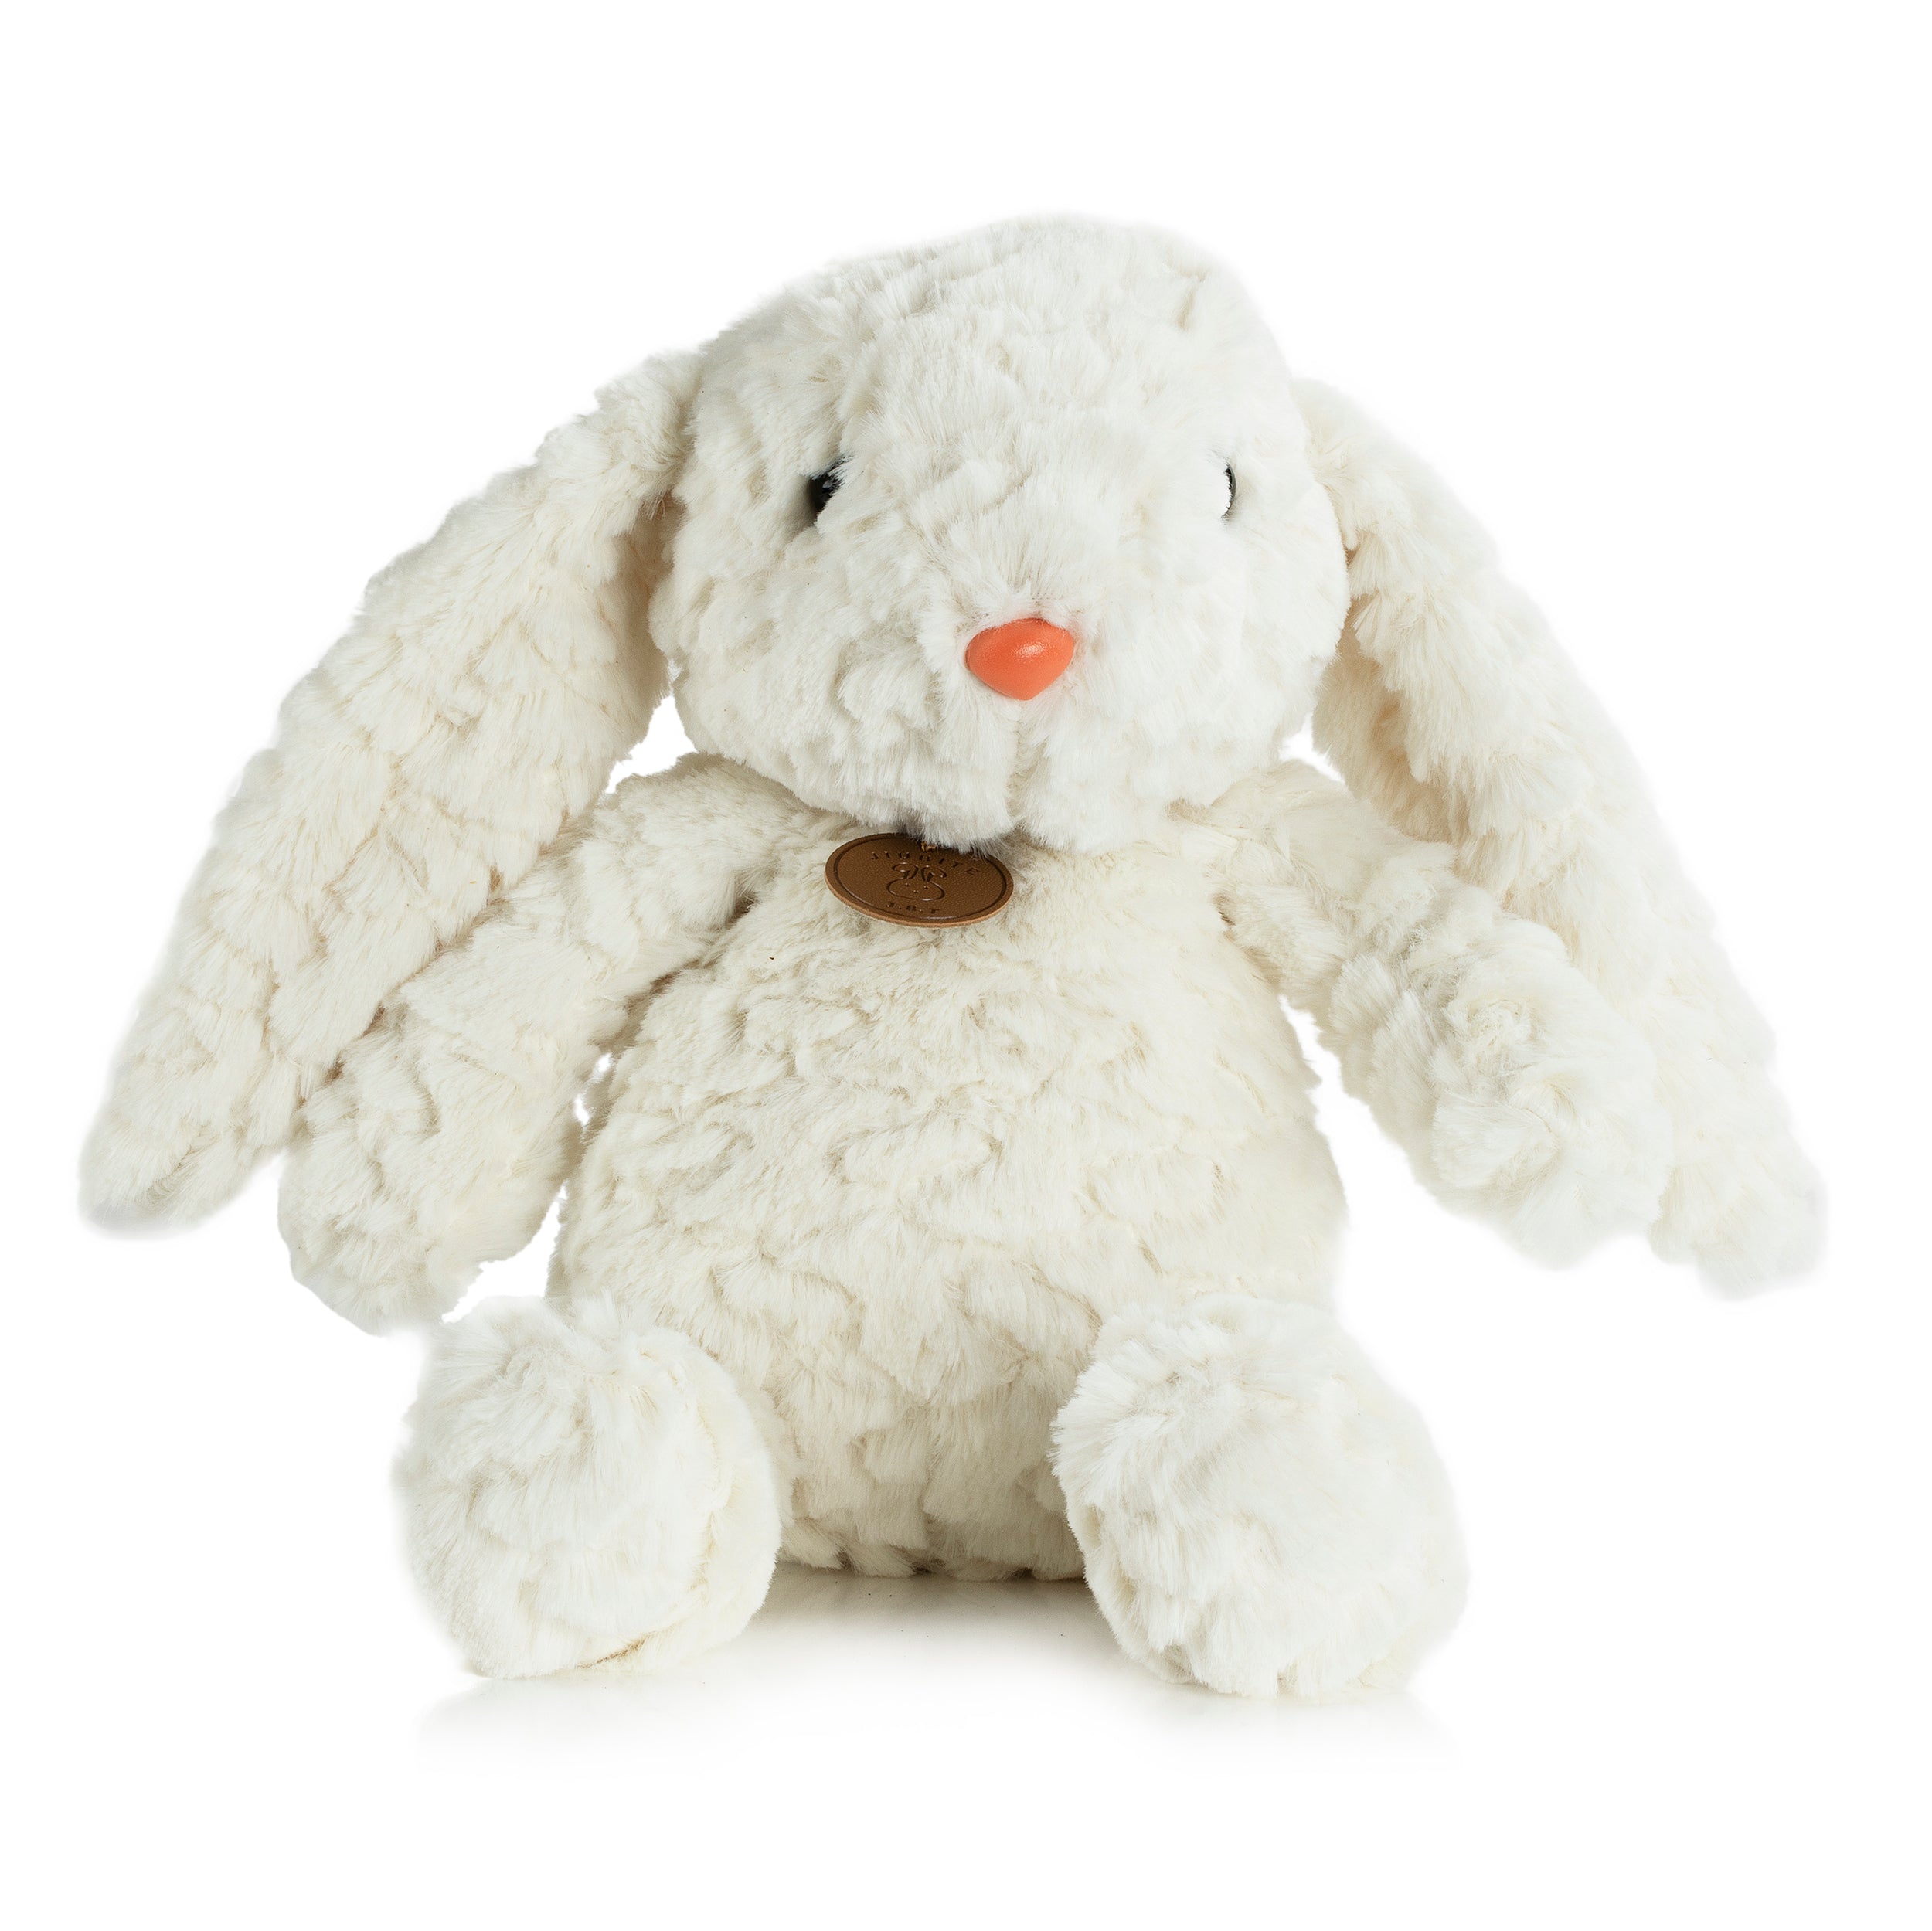 Plush Toys - Noah's Ark Stuffed Animals 8-12"